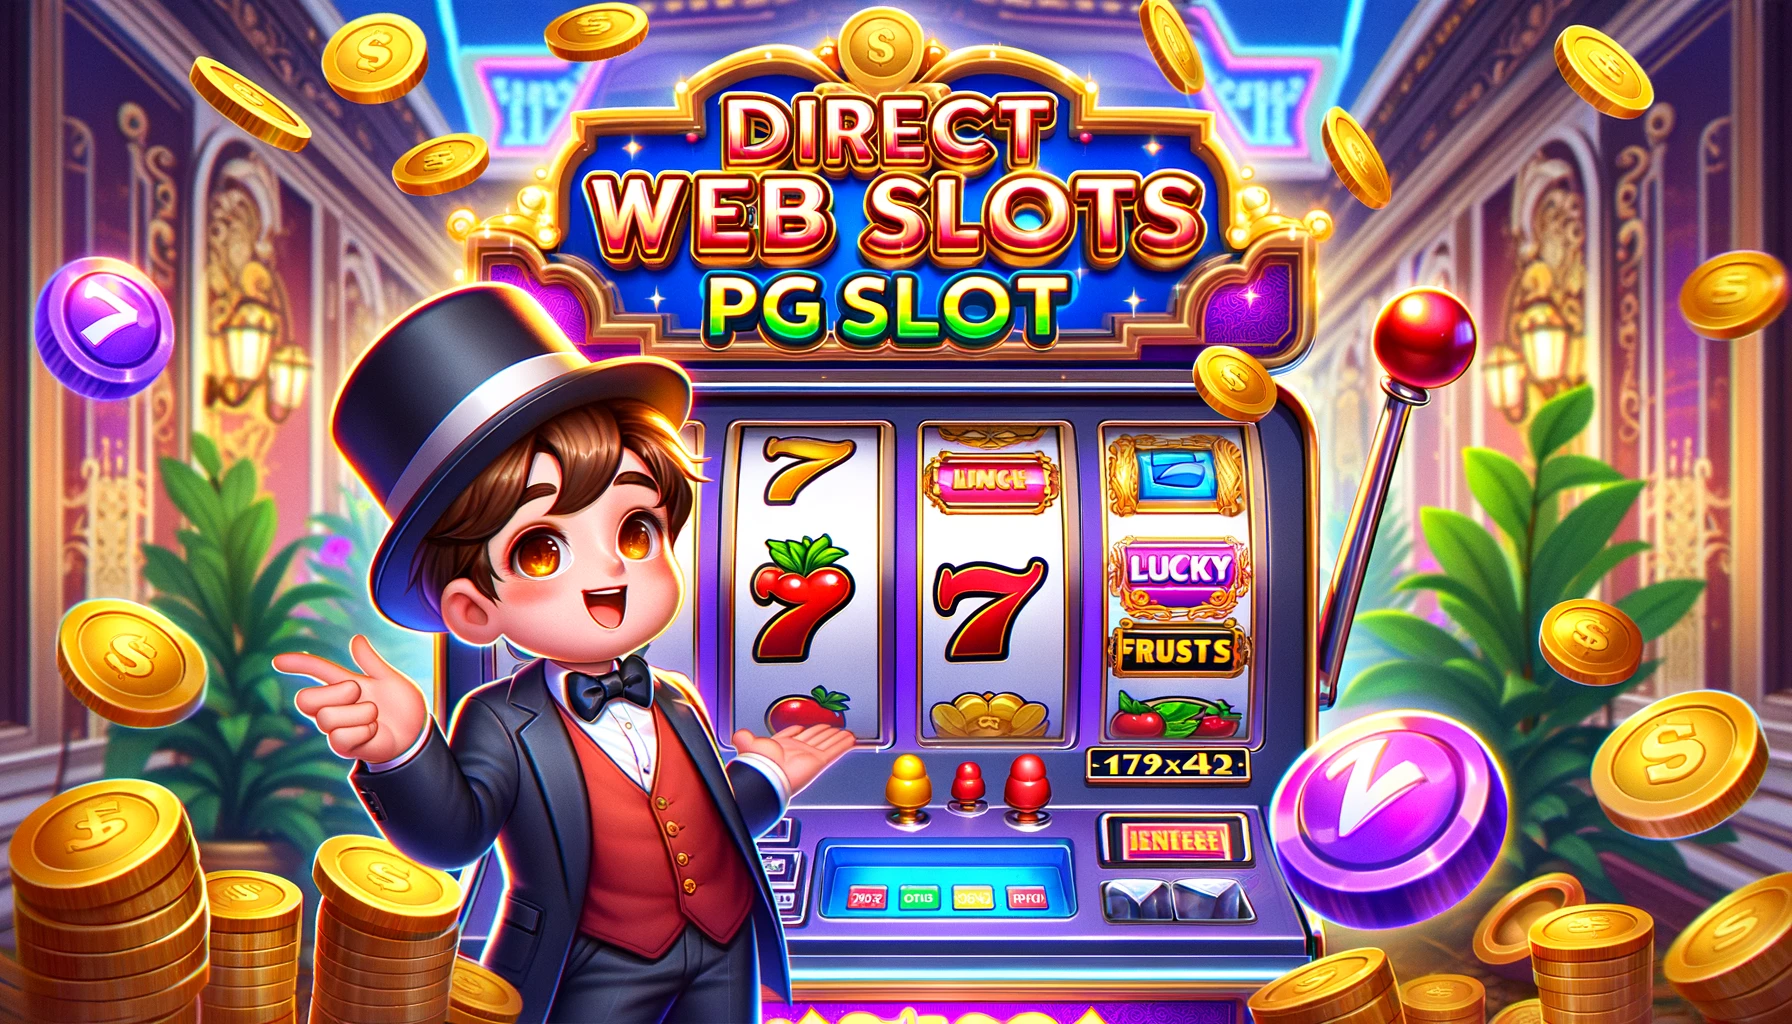 Direct web slots PGSLOT